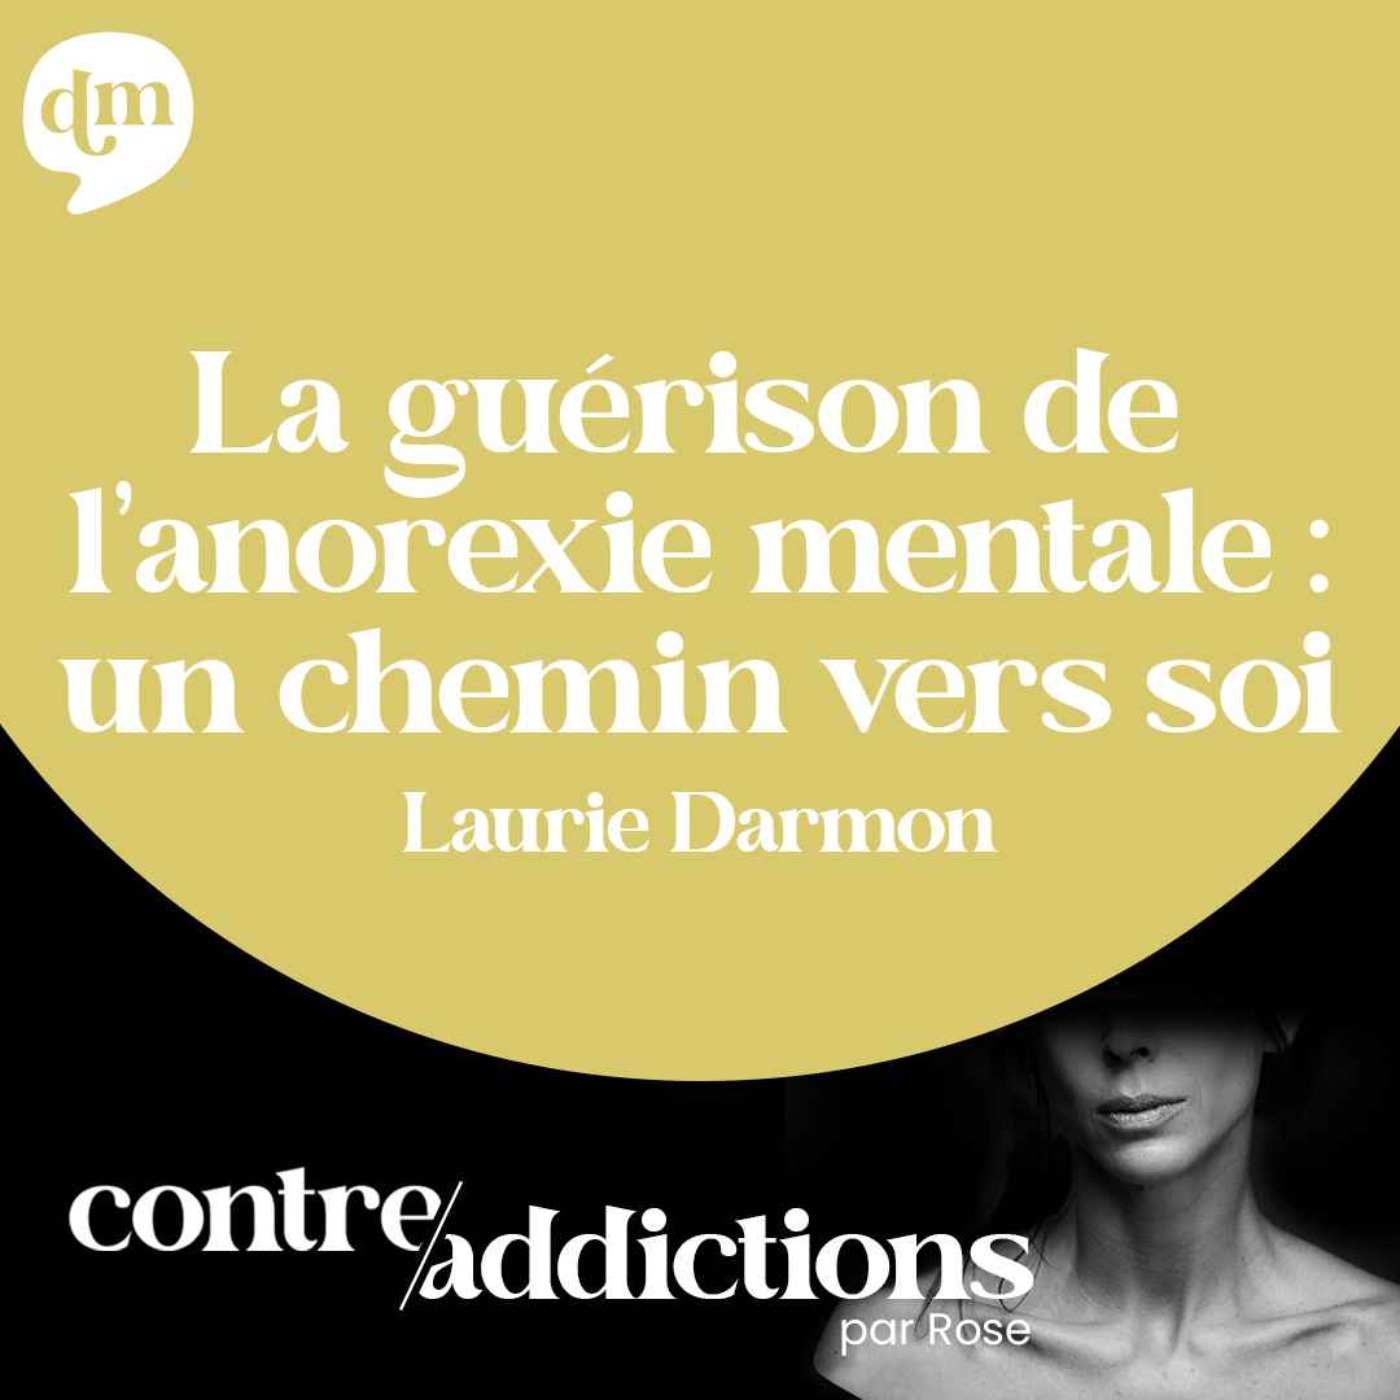 [REDIFF] - Laurie Darmon - La guérison de l'anorexie mentale : un chemin vers soi